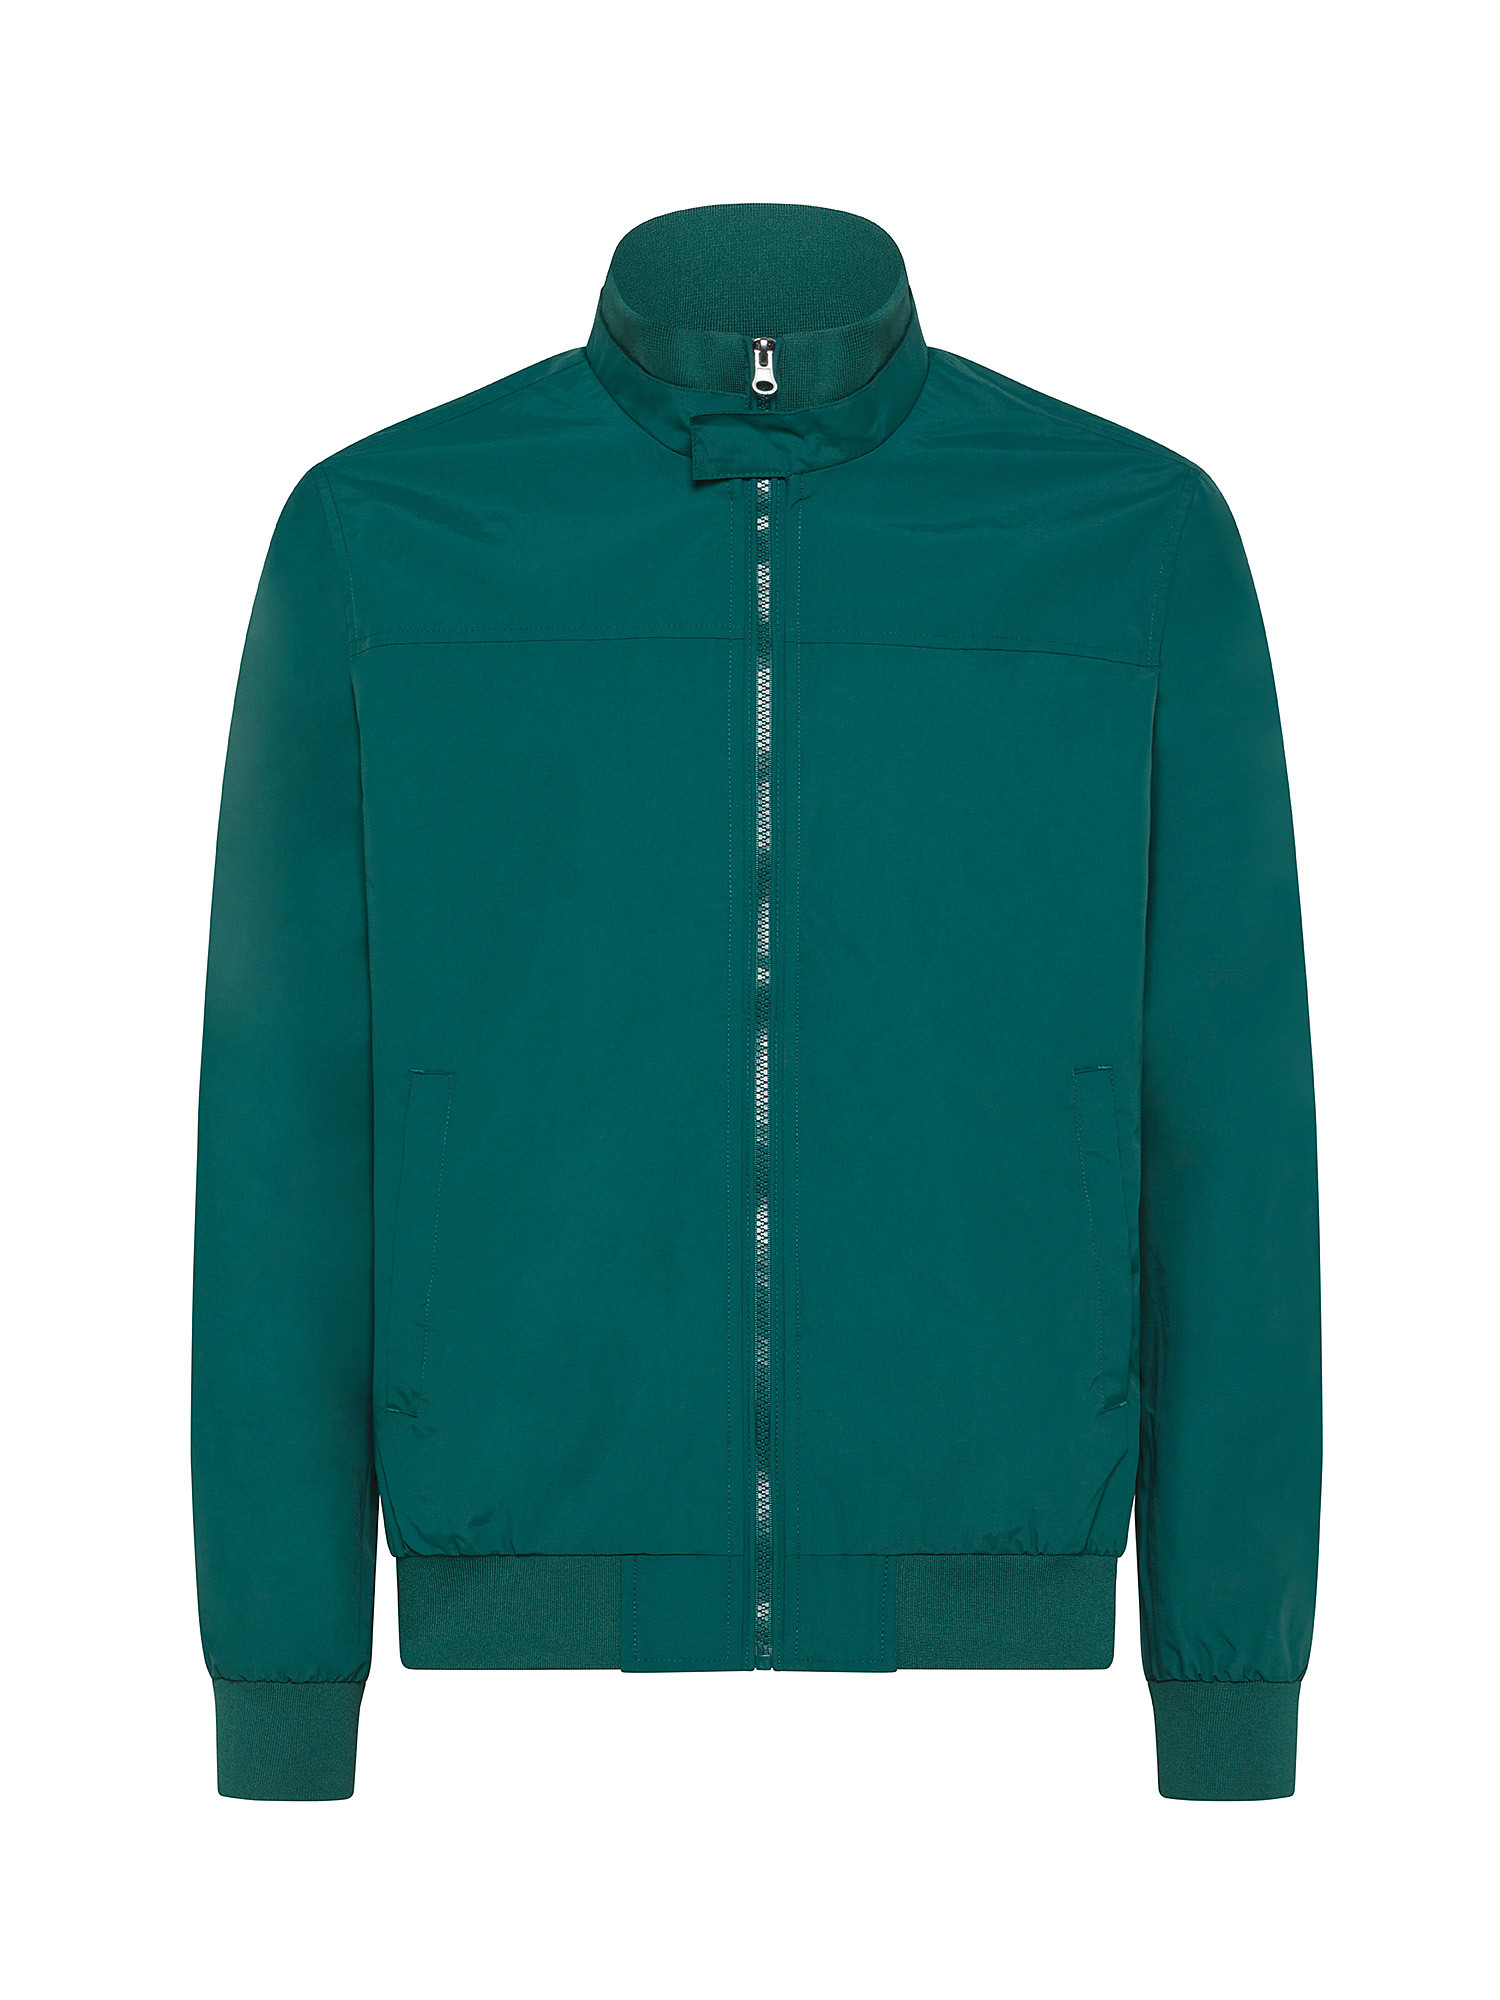 JCT - Full zip jacket, Green, large image number 0